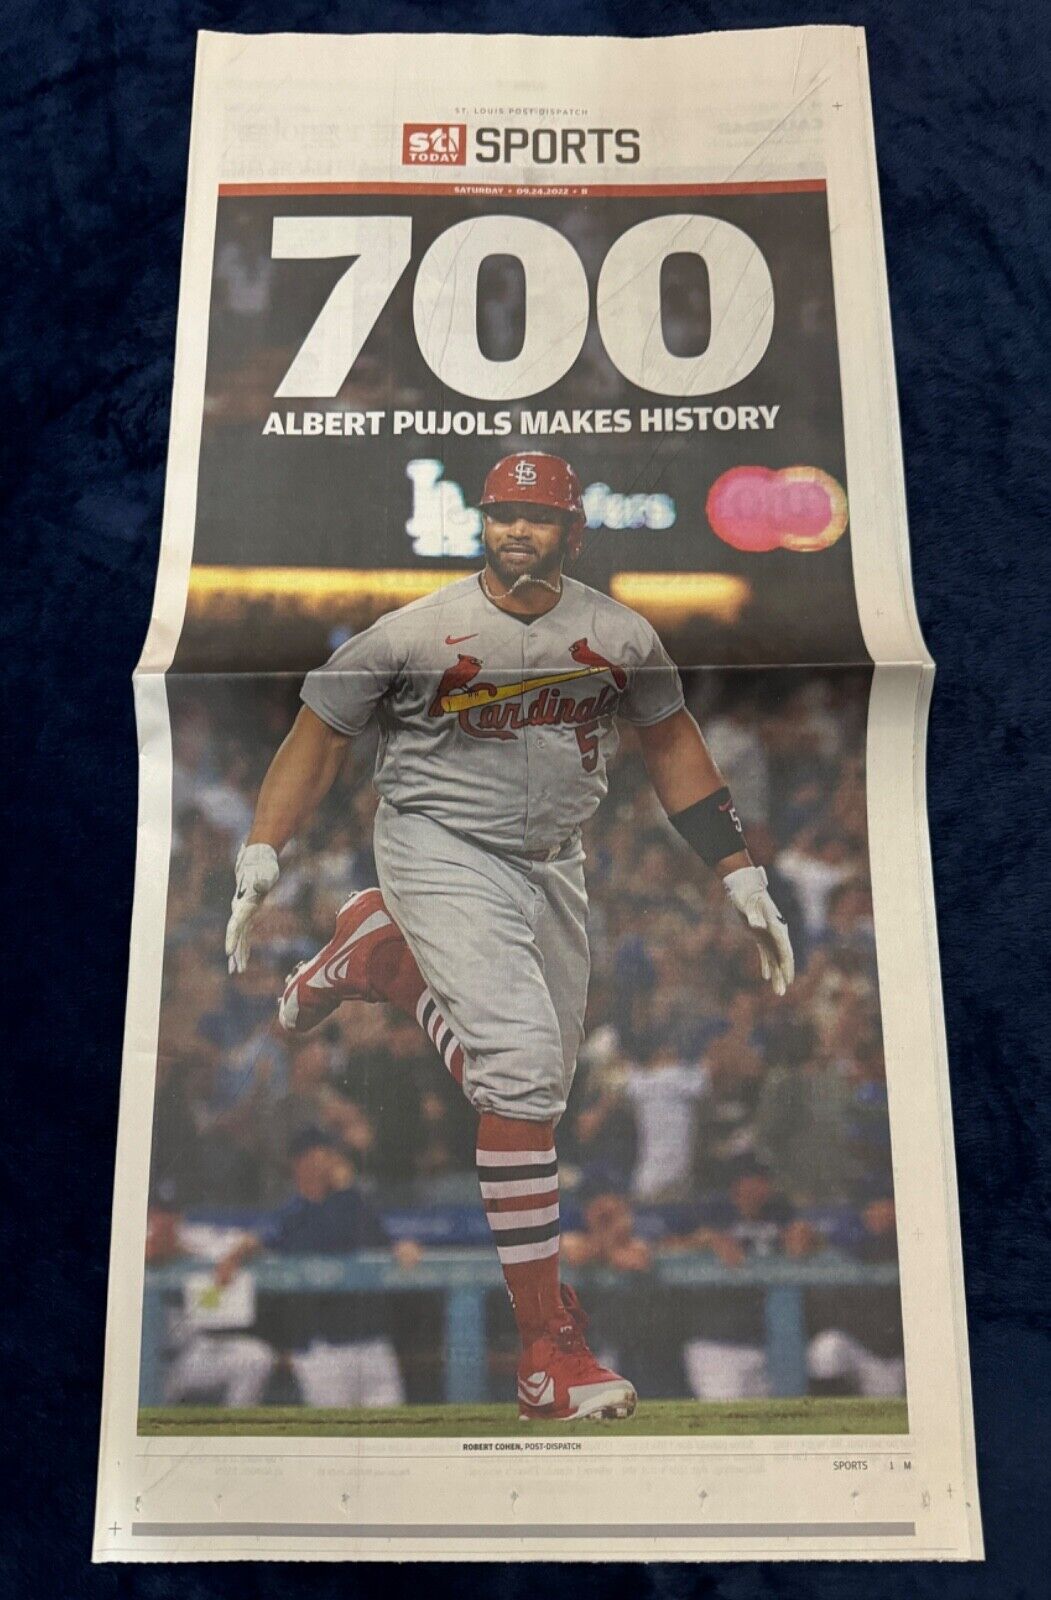 Albert Pujols 700th Home Run Collectible Newspaper